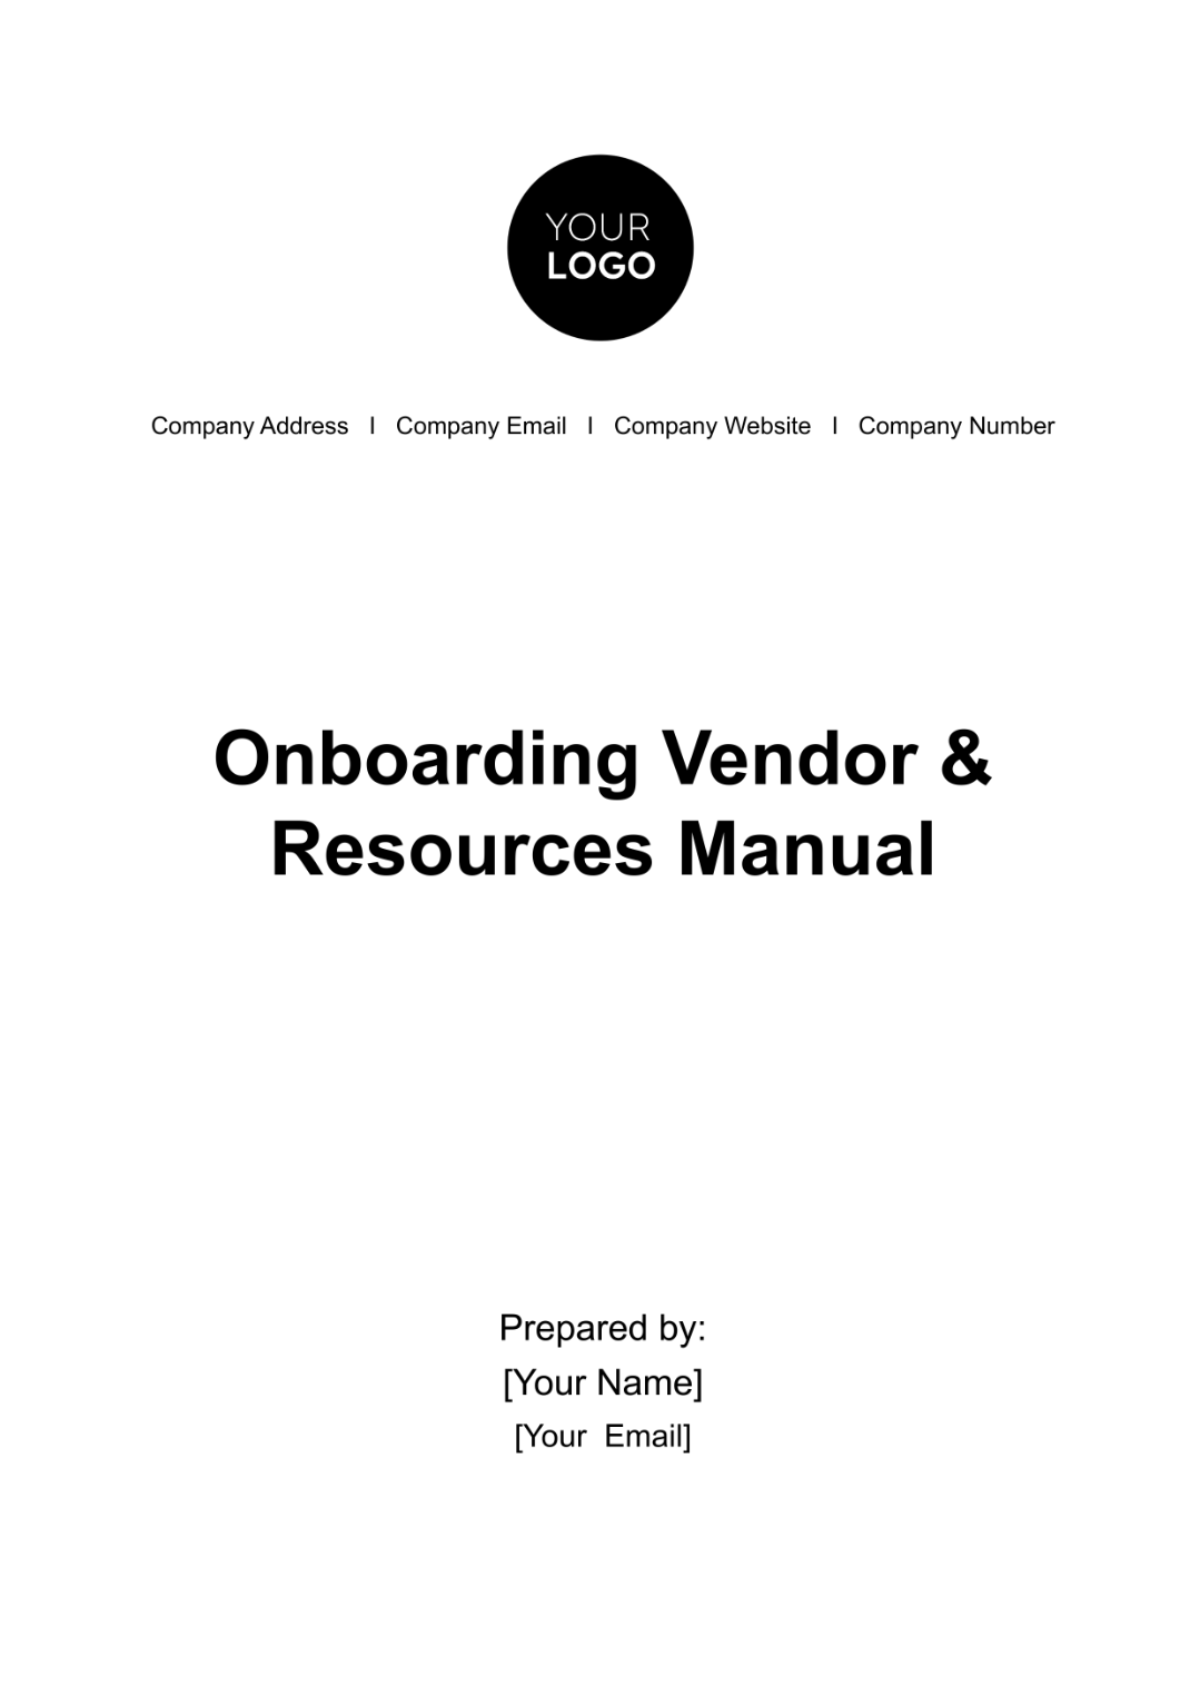 Onboarding Vendor & Resources Manual HR Template